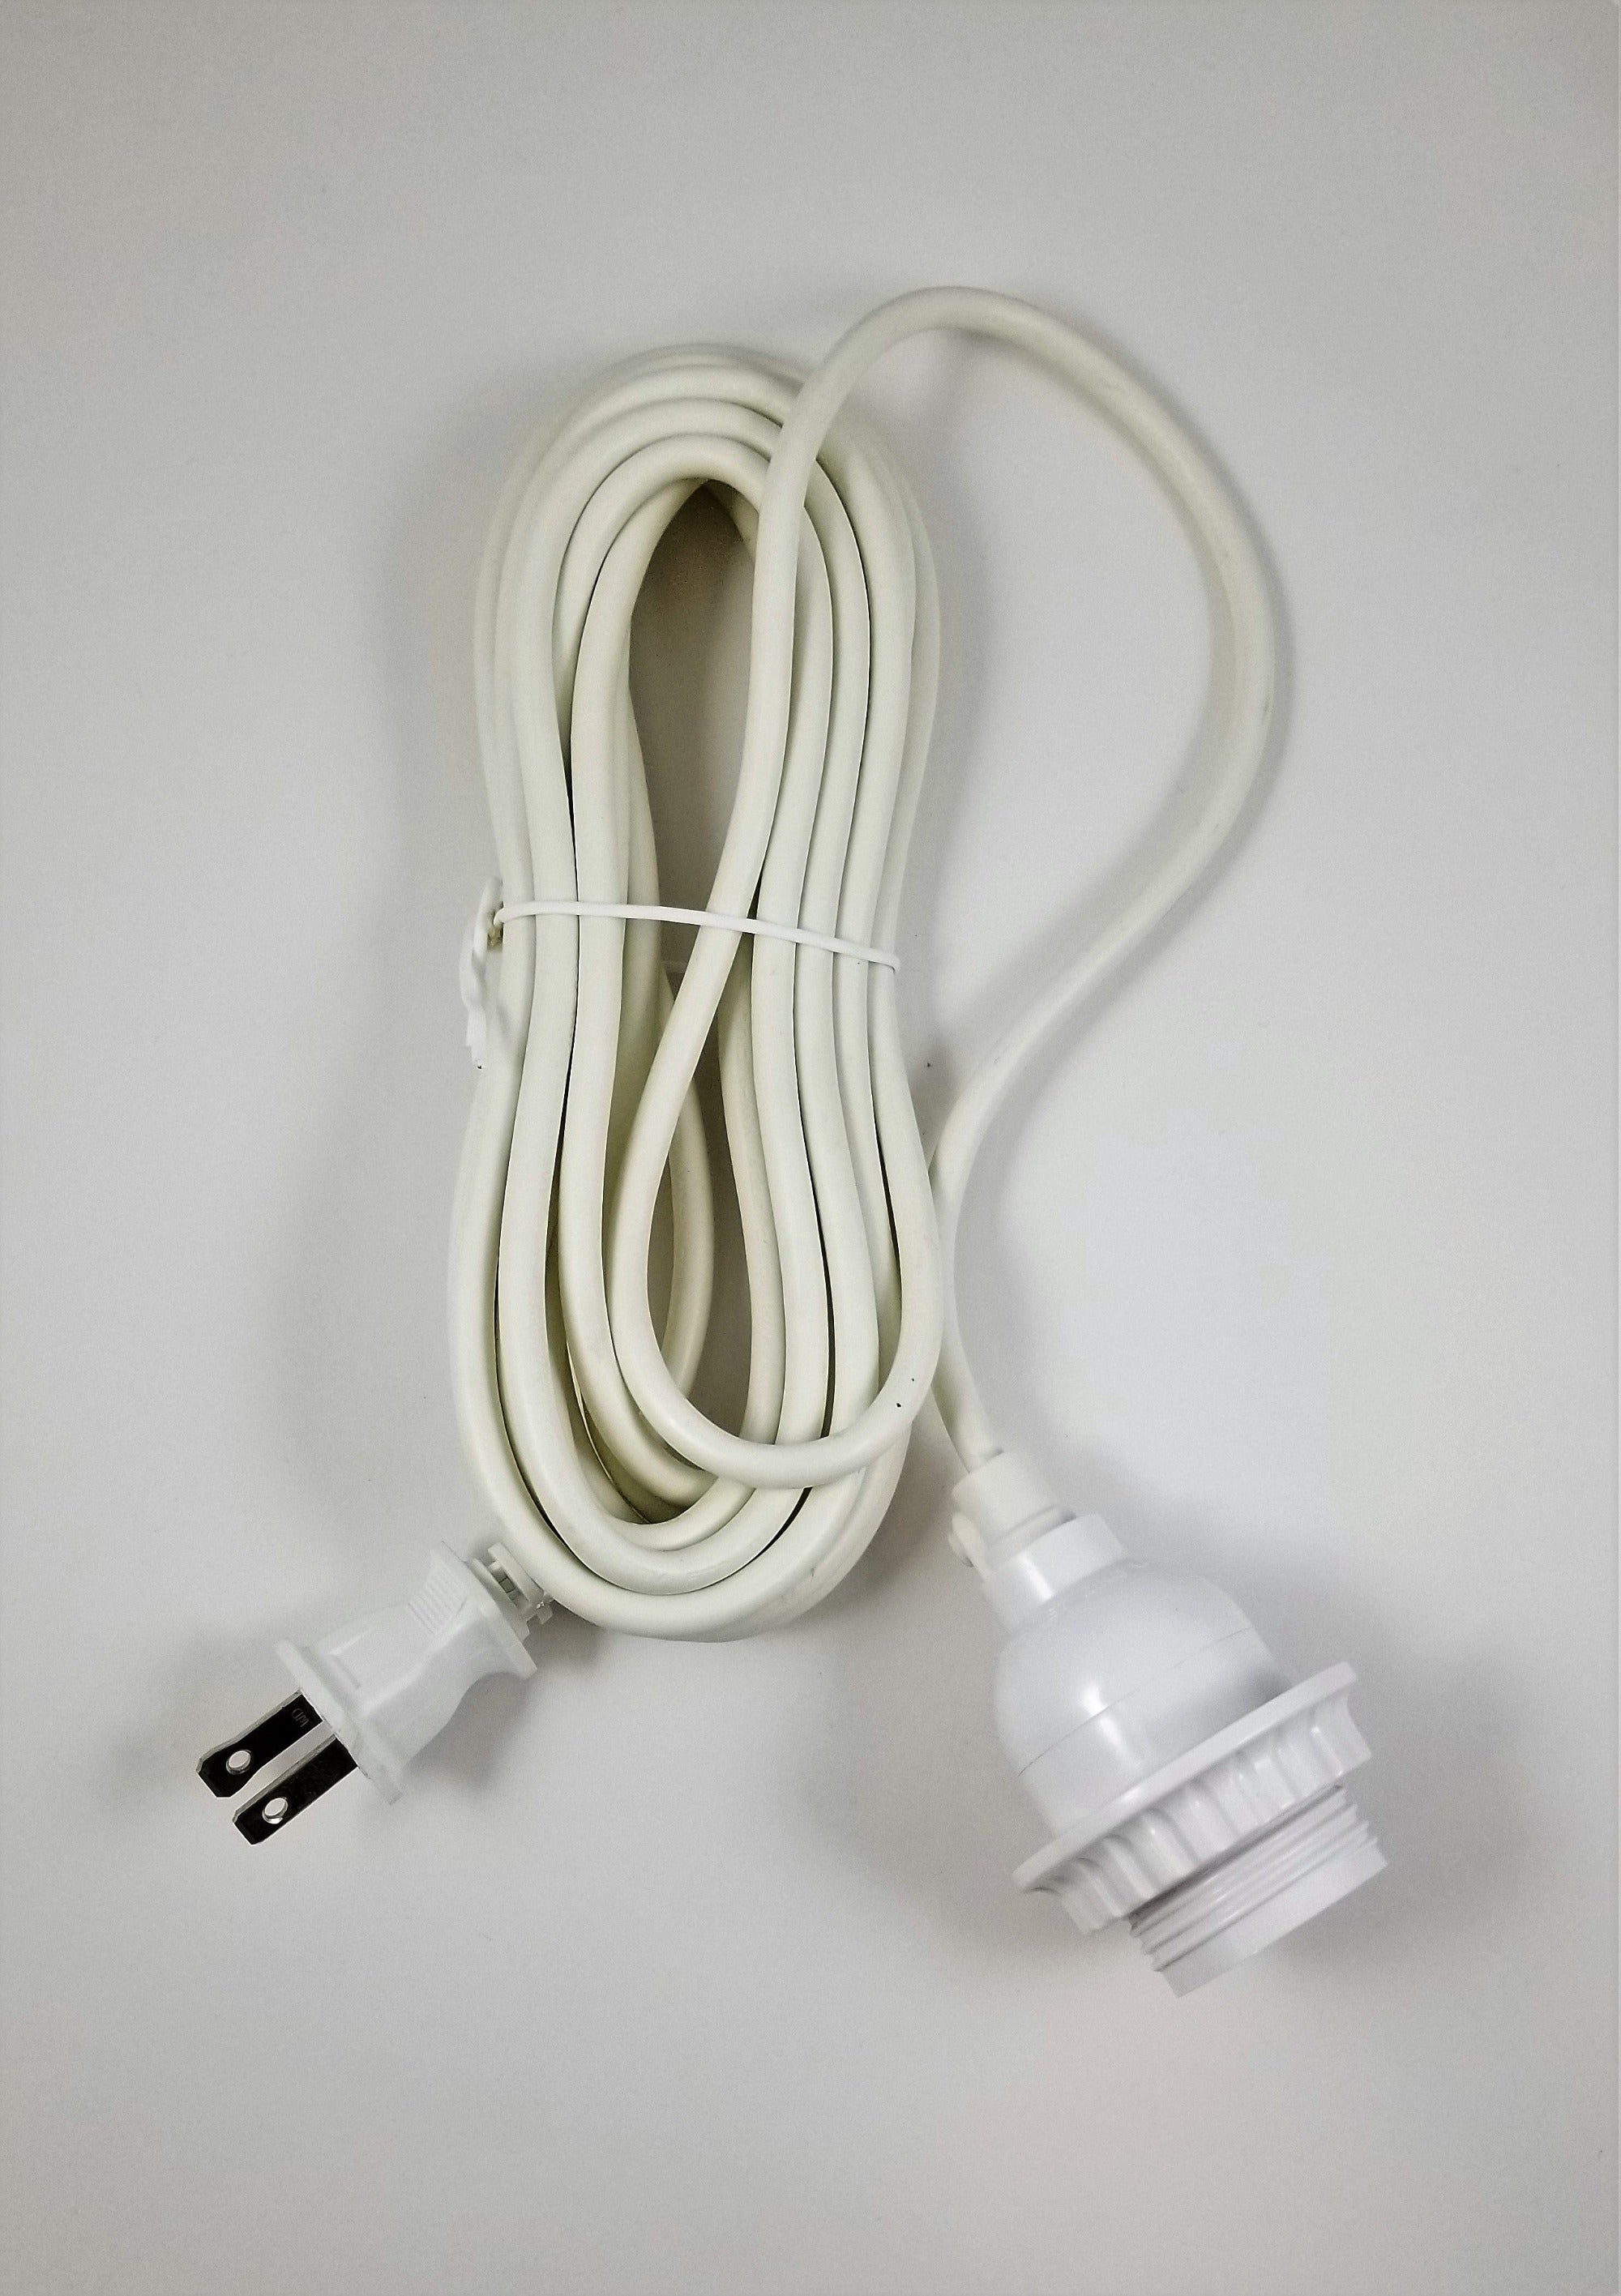 Pendant Kit - White Socket with White Cord